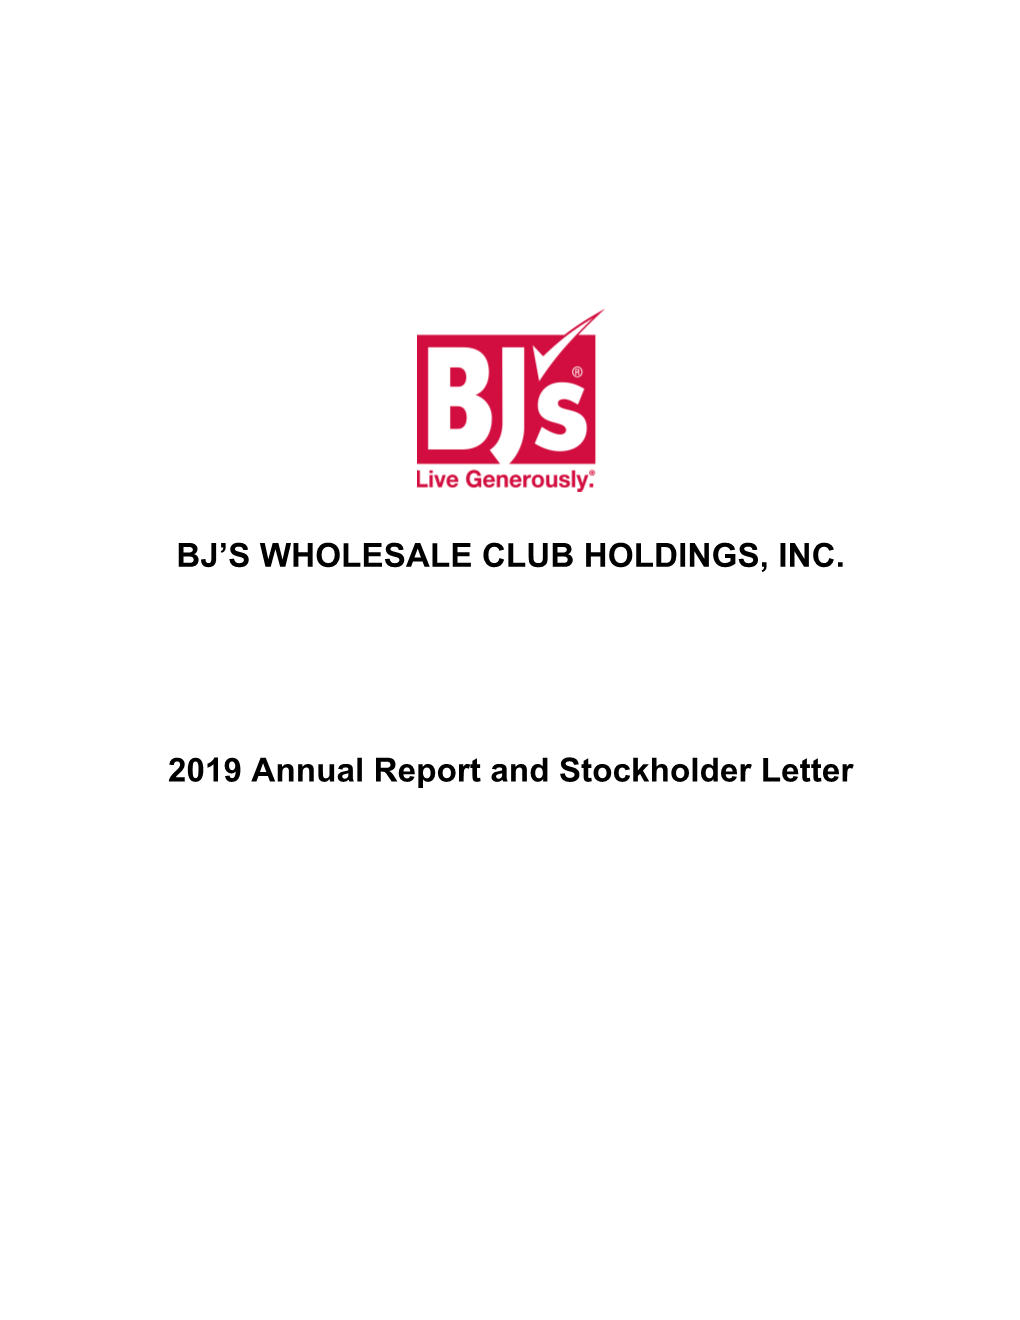 BJ's WHOLESALE CLUB HOLDINGS, INC. 2019 Annual